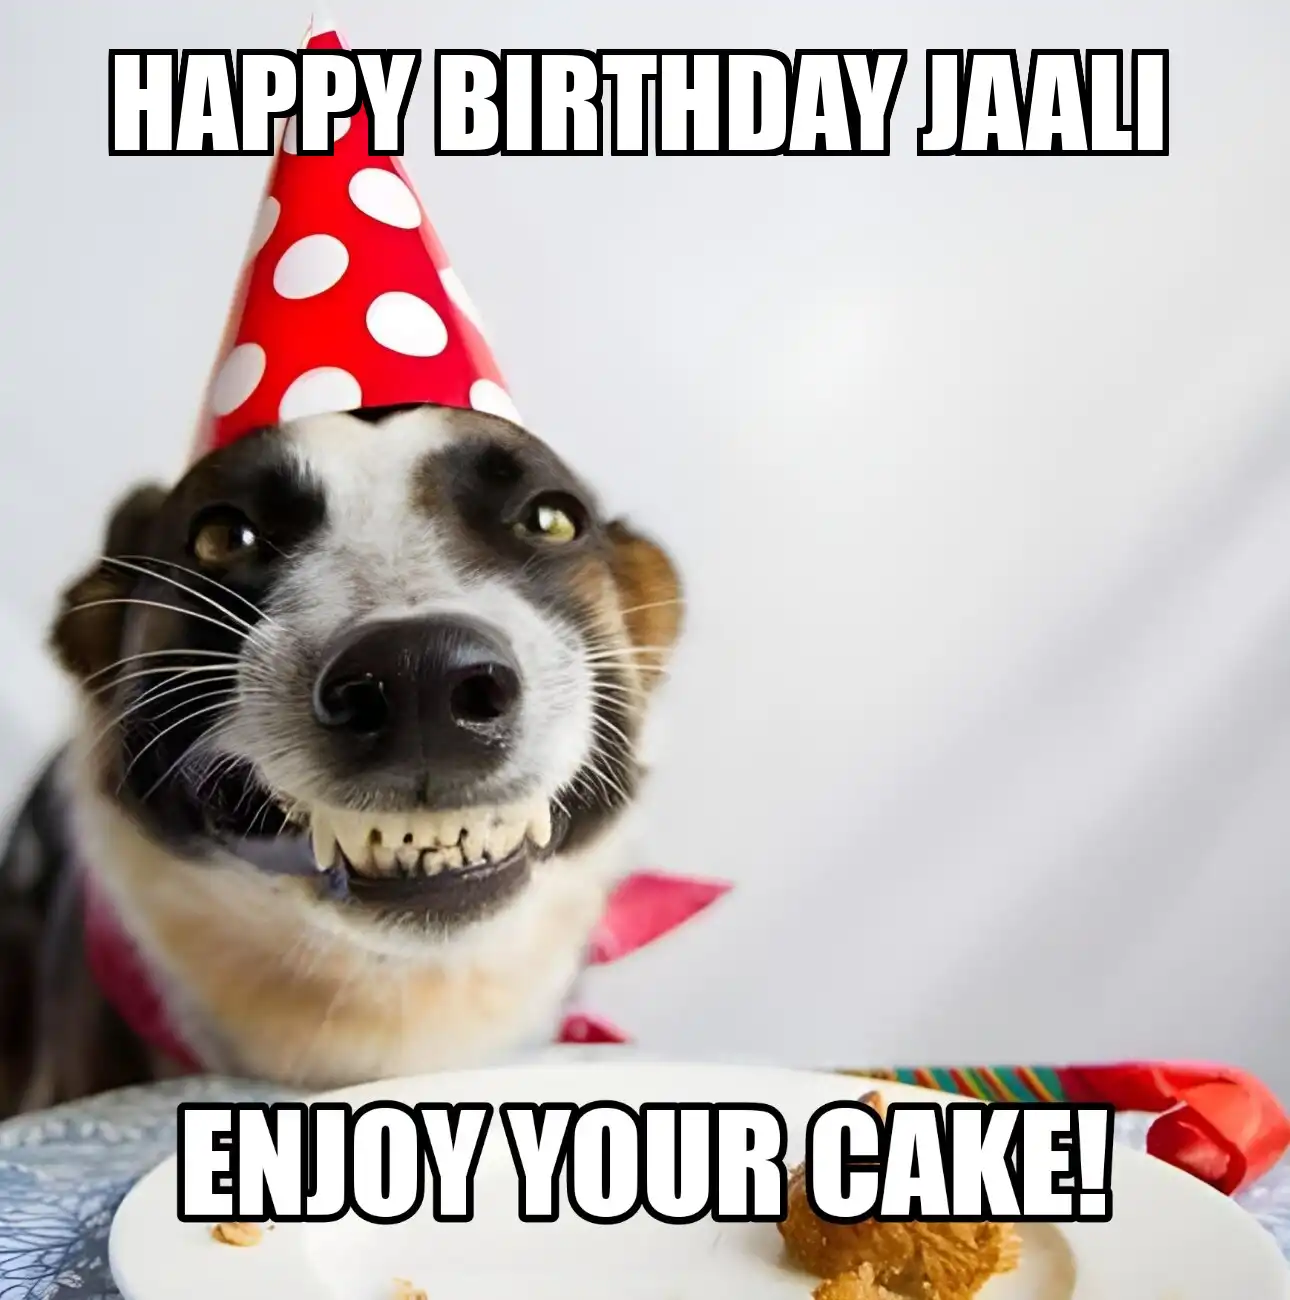 Happy Birthday Jaali Enjoy Your Cake Dog Meme